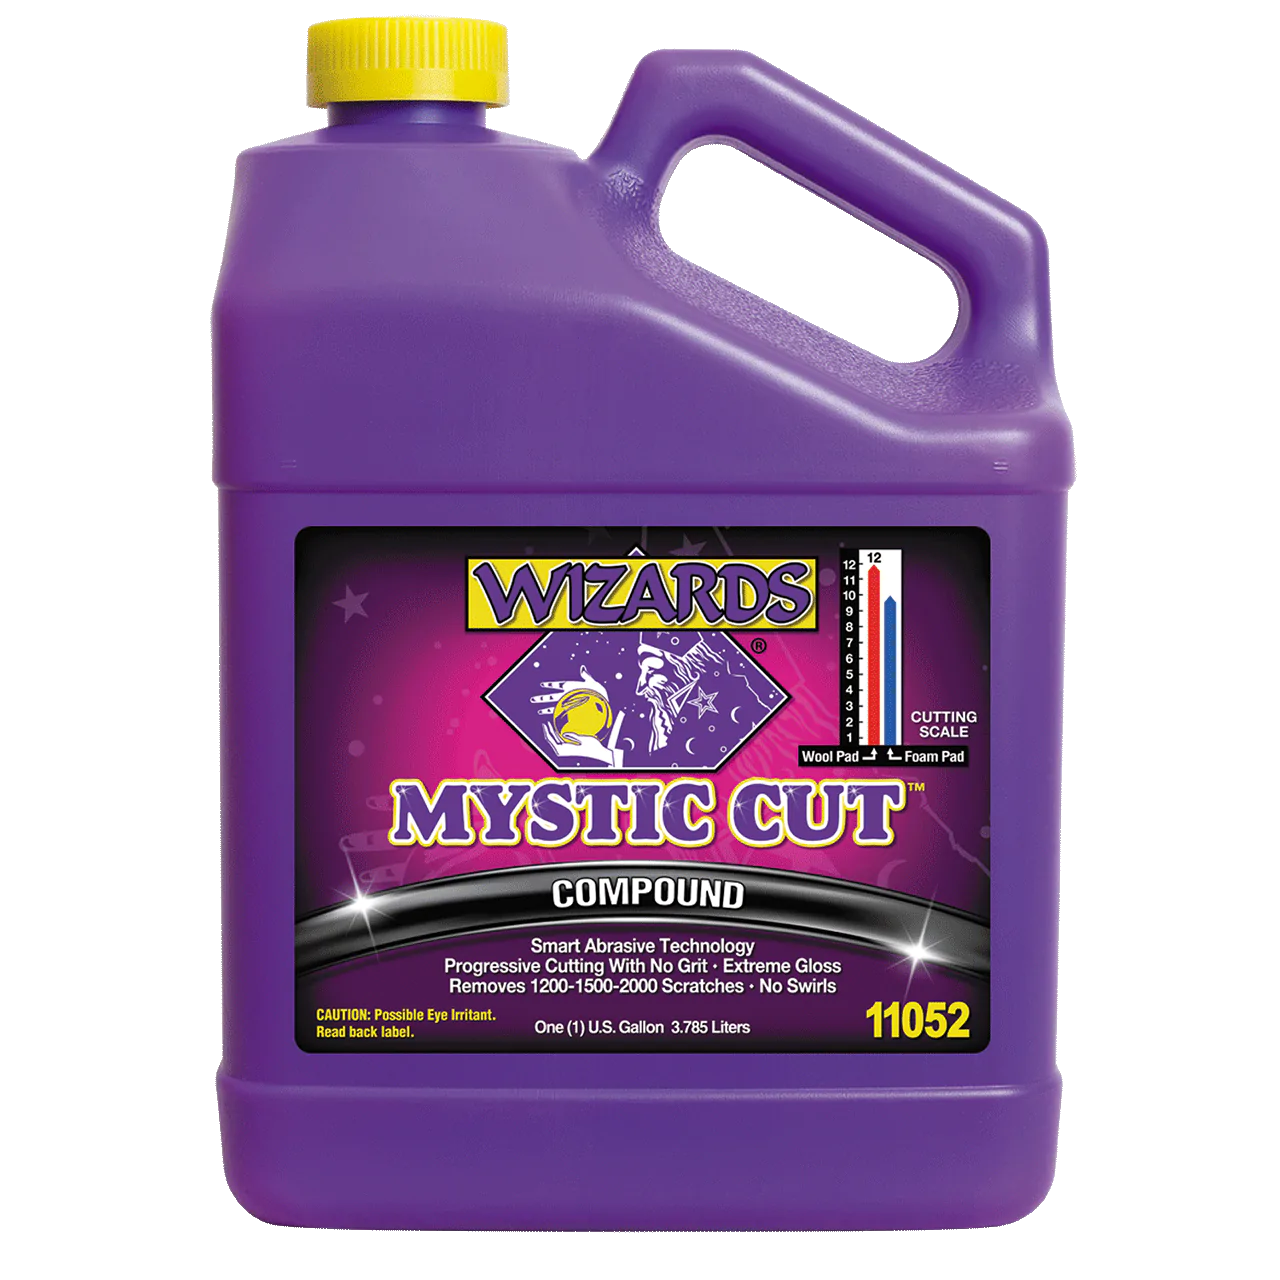 Wizards Mystic Cut Compound